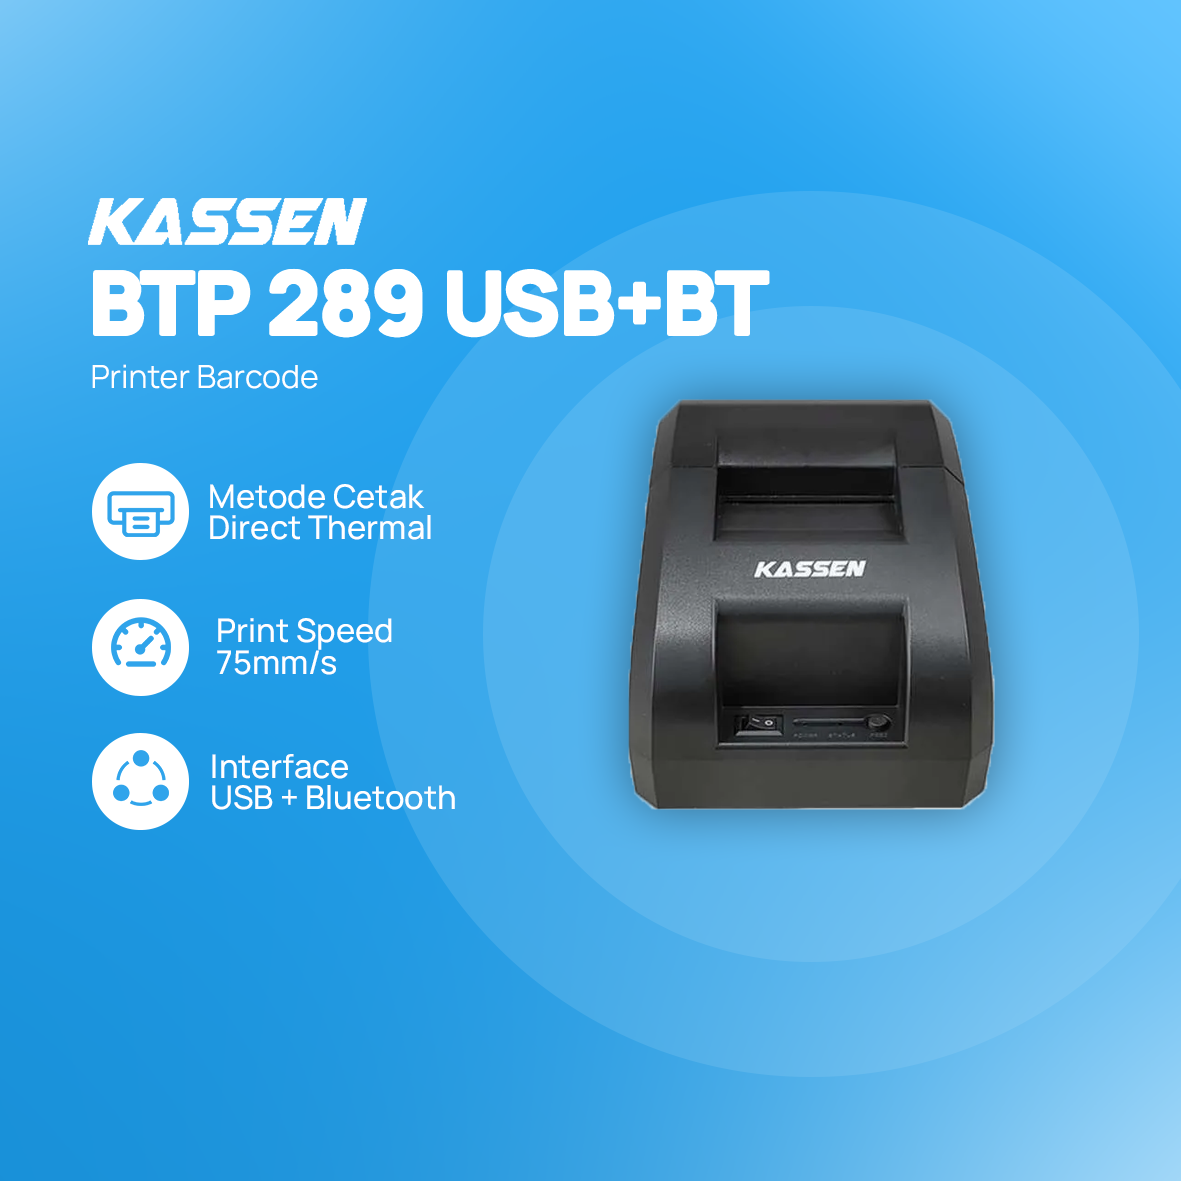 Printer Kasir Kassen BTP 289 USB+BT